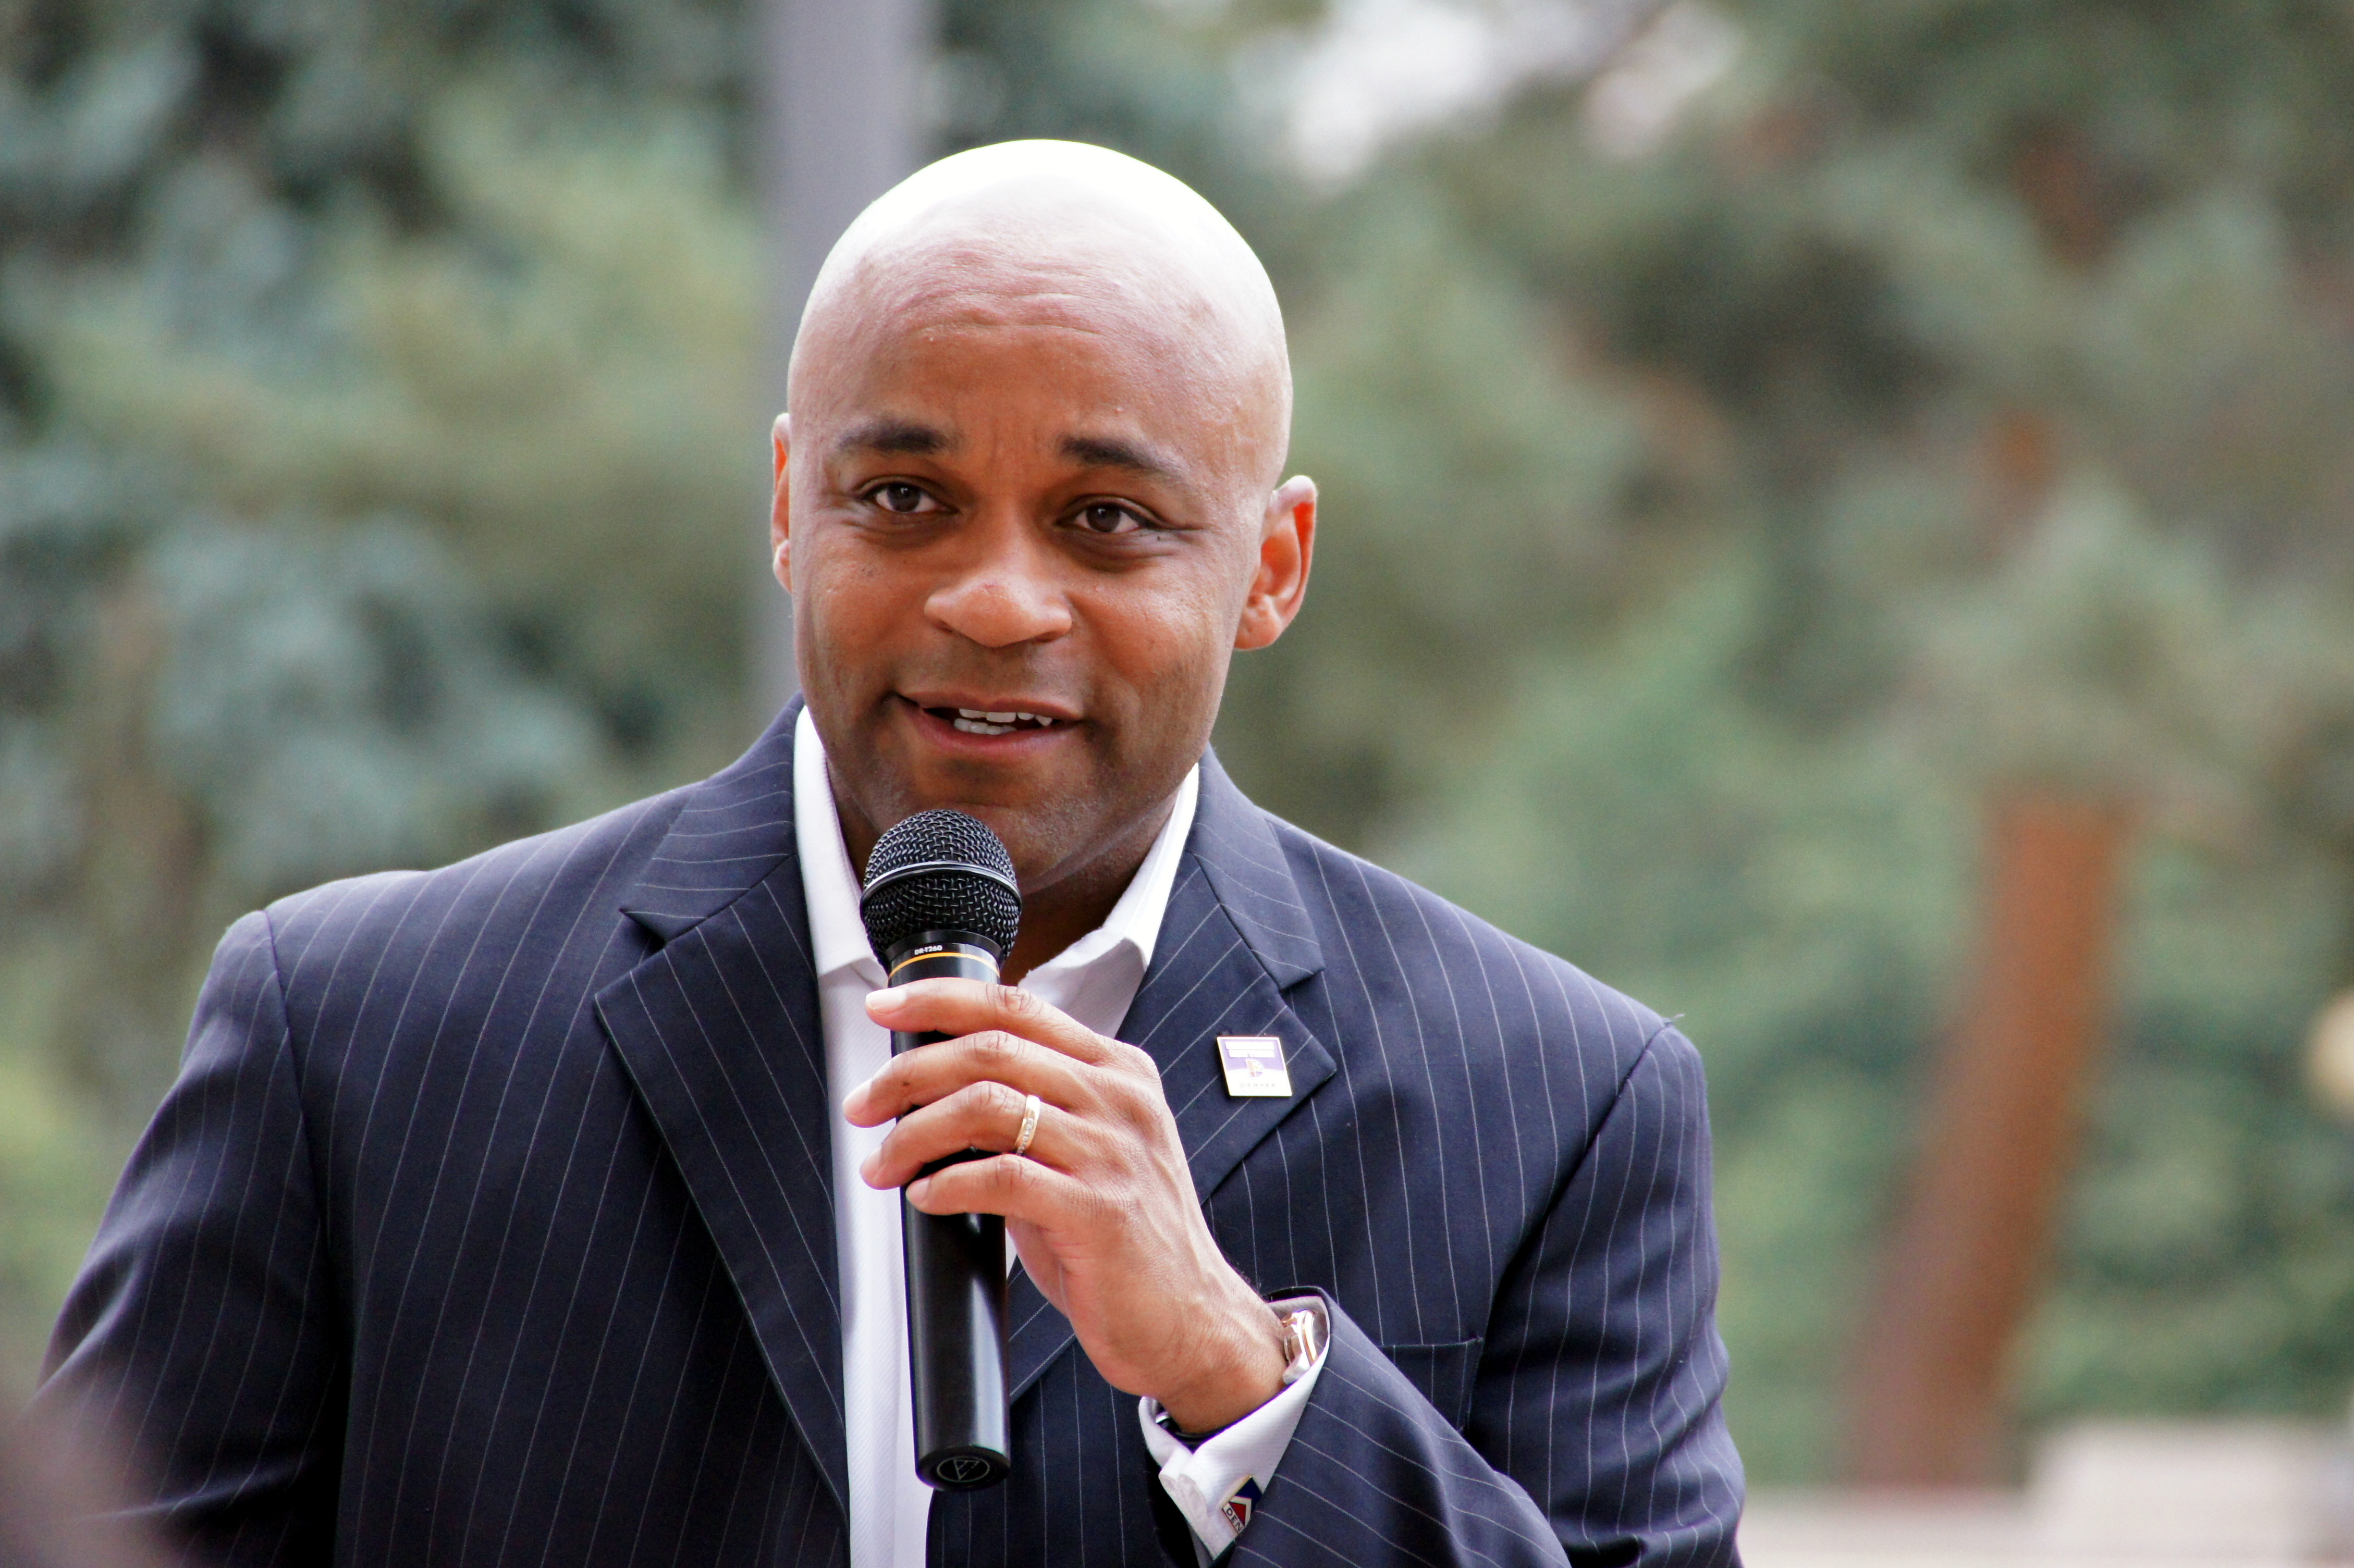 Denver Mayor Michael Hancock, speaking at a public event.